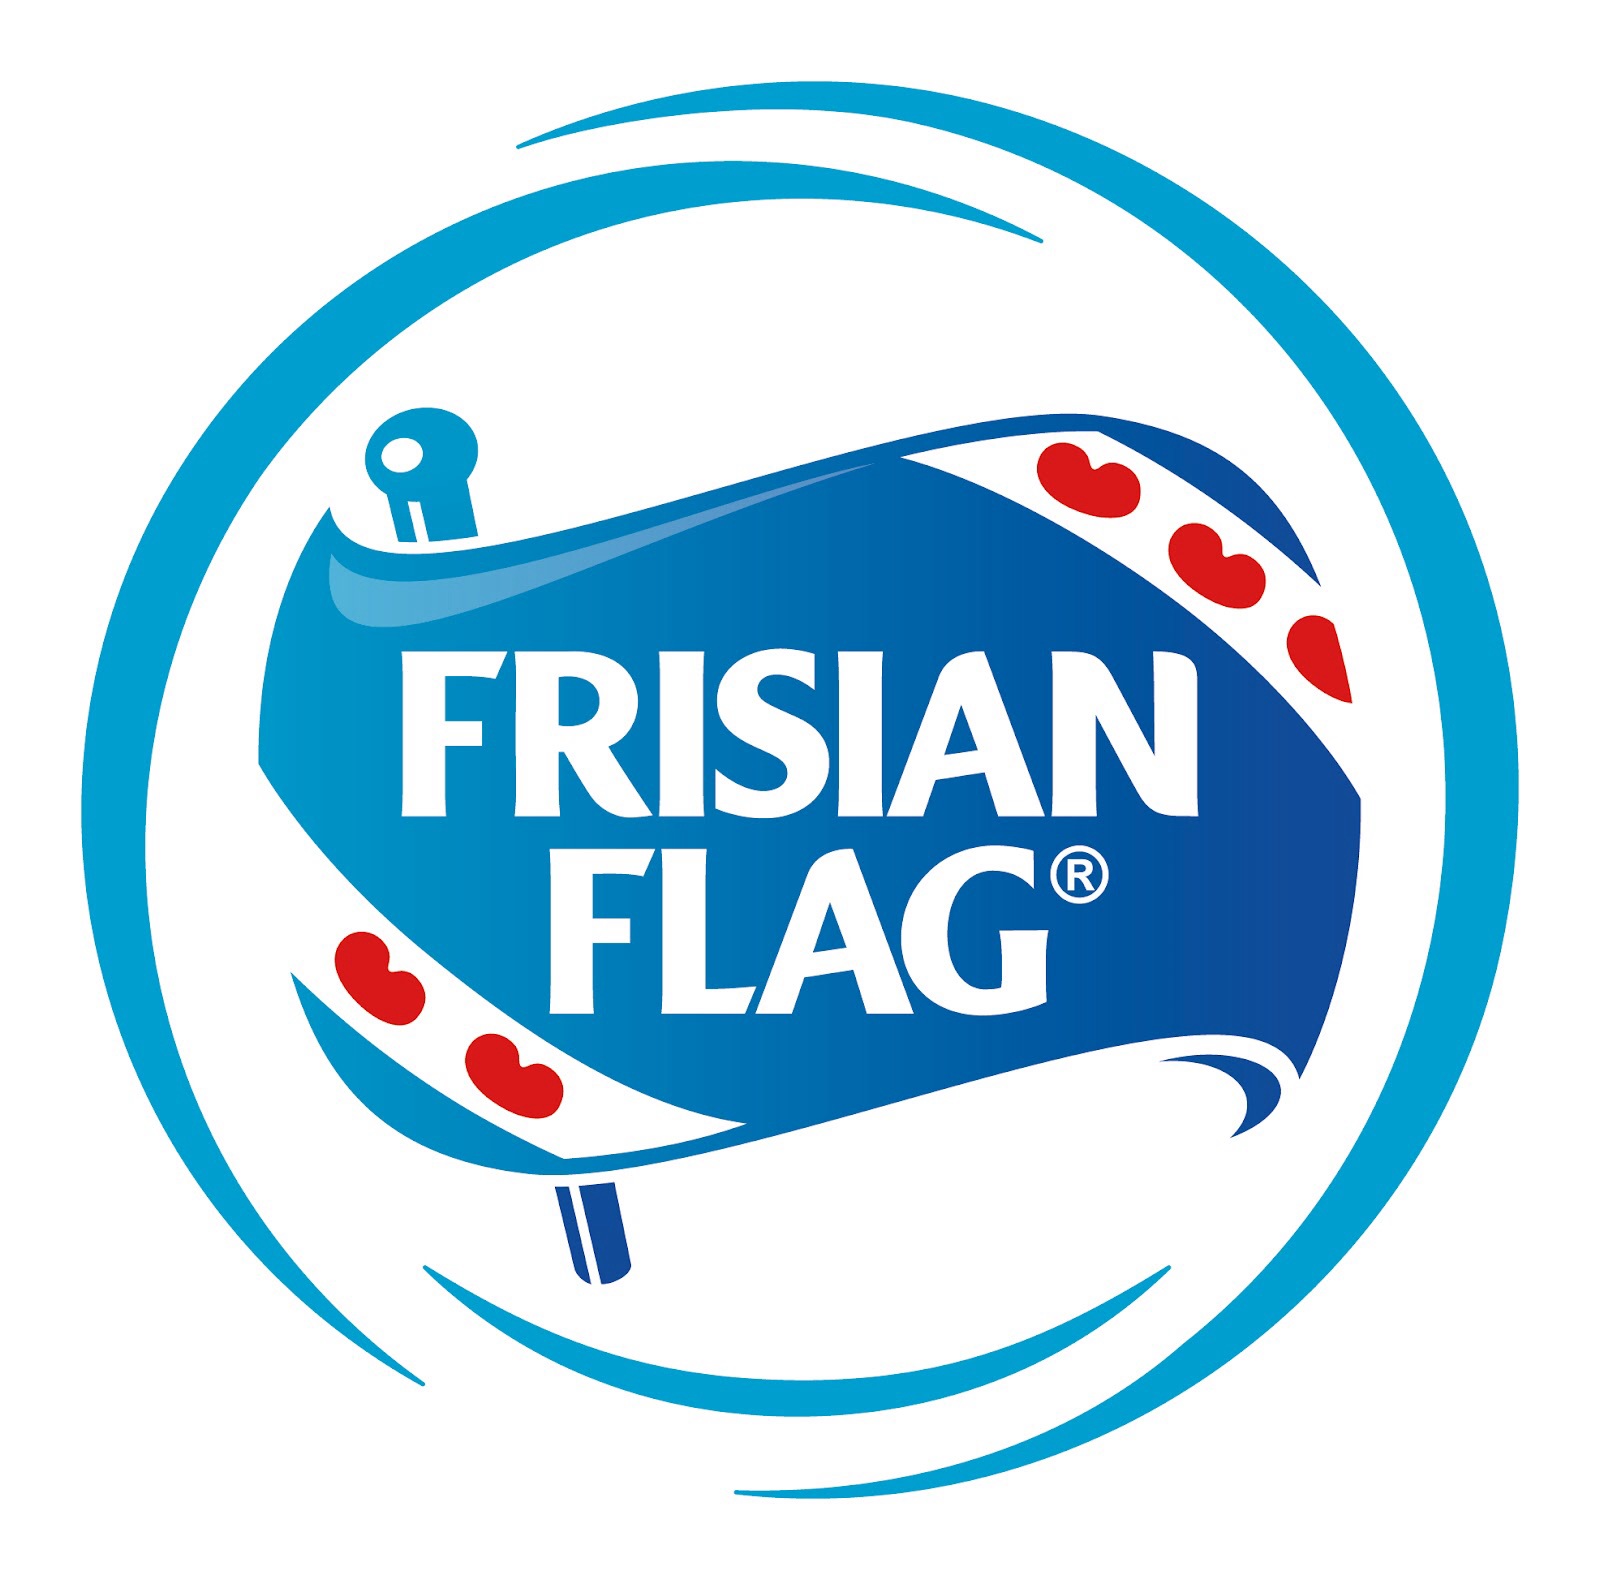 Frisian Flag | Logopedia | Fandom powered by Wikia